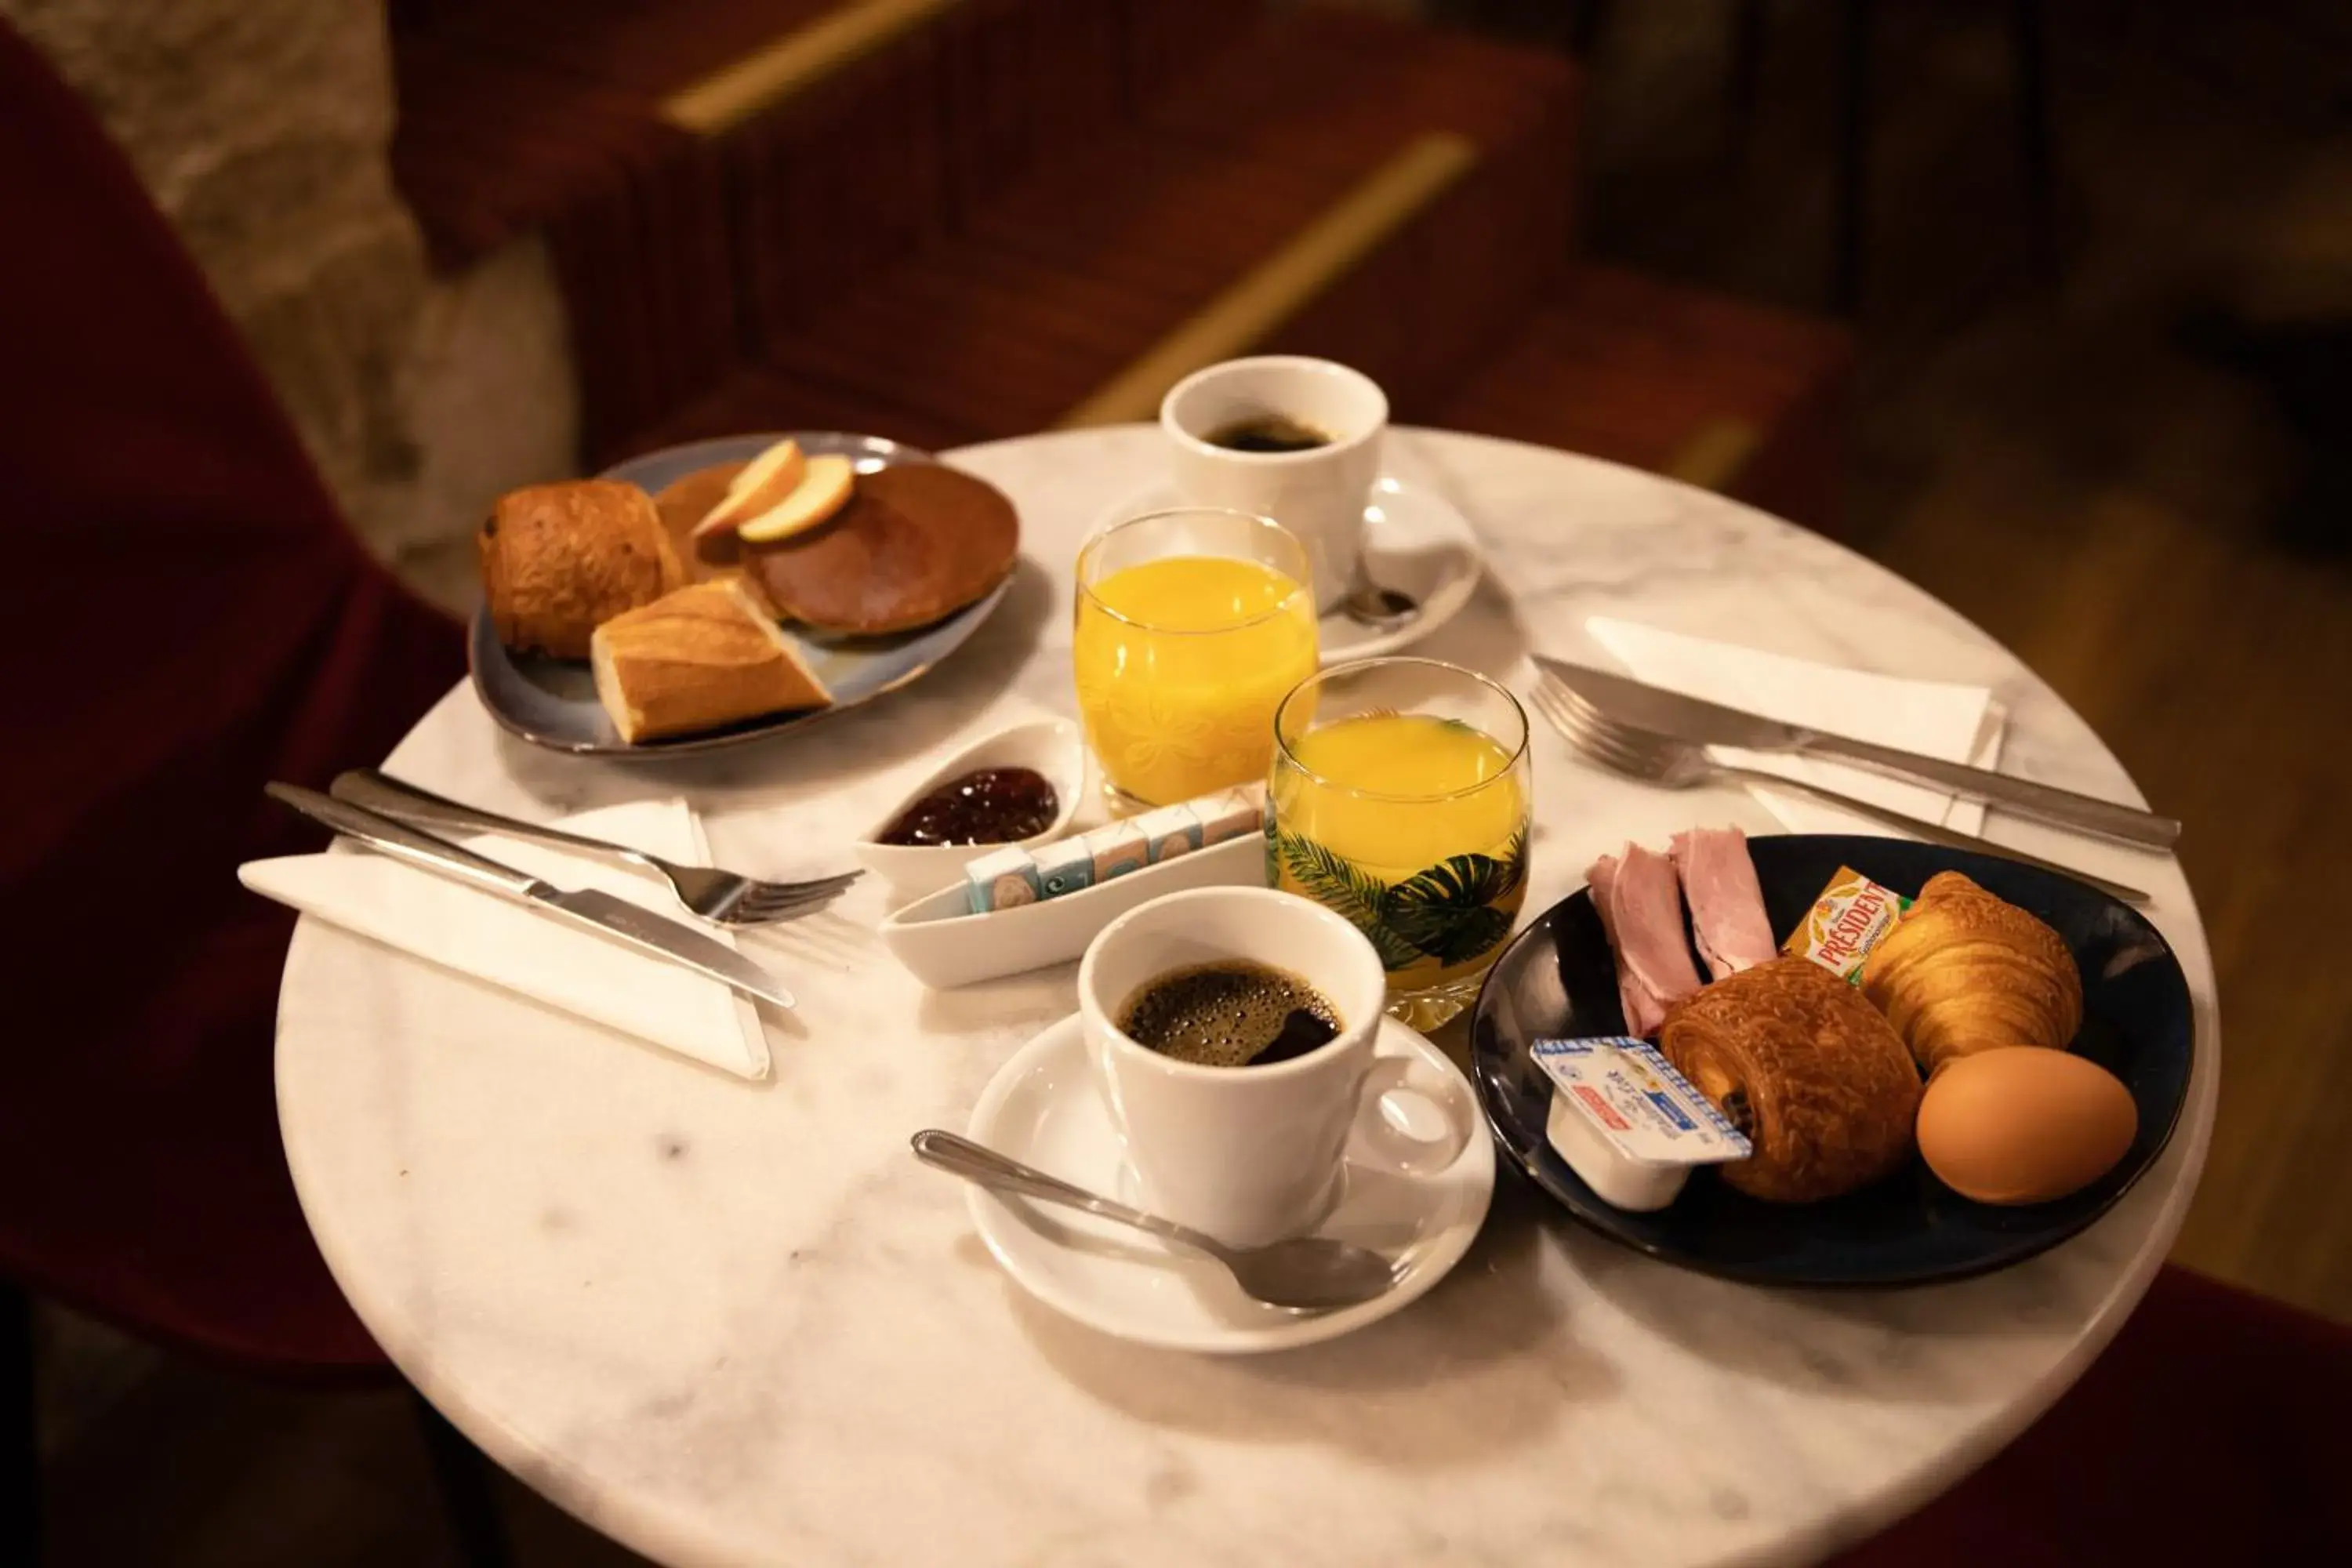 Food and drinks, Breakfast in Hôtel du Théâtre by Patrick Hayat